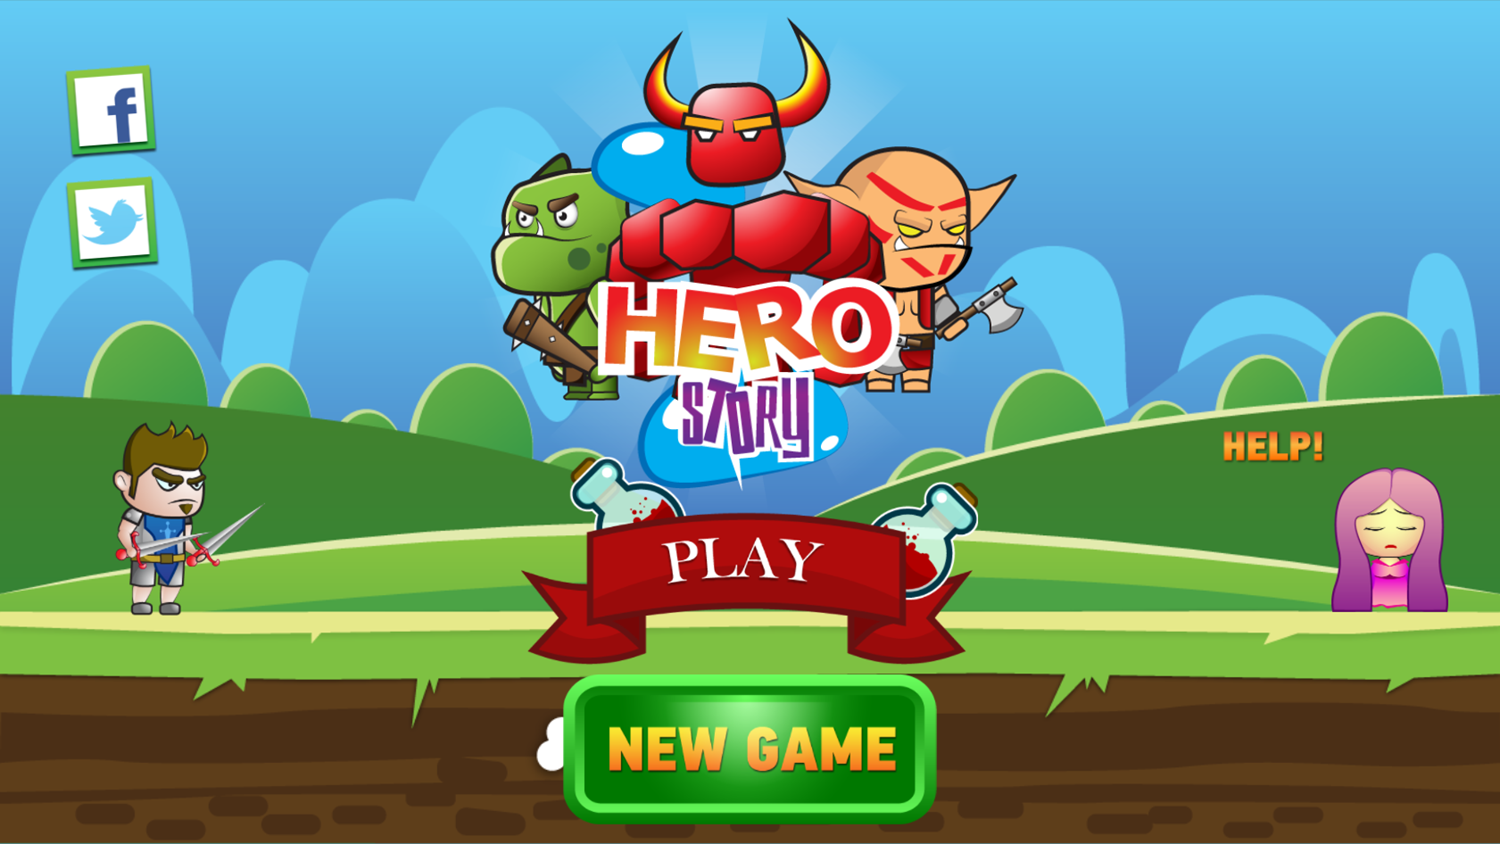 Hero Story Game Welcome Screen Screenshot.